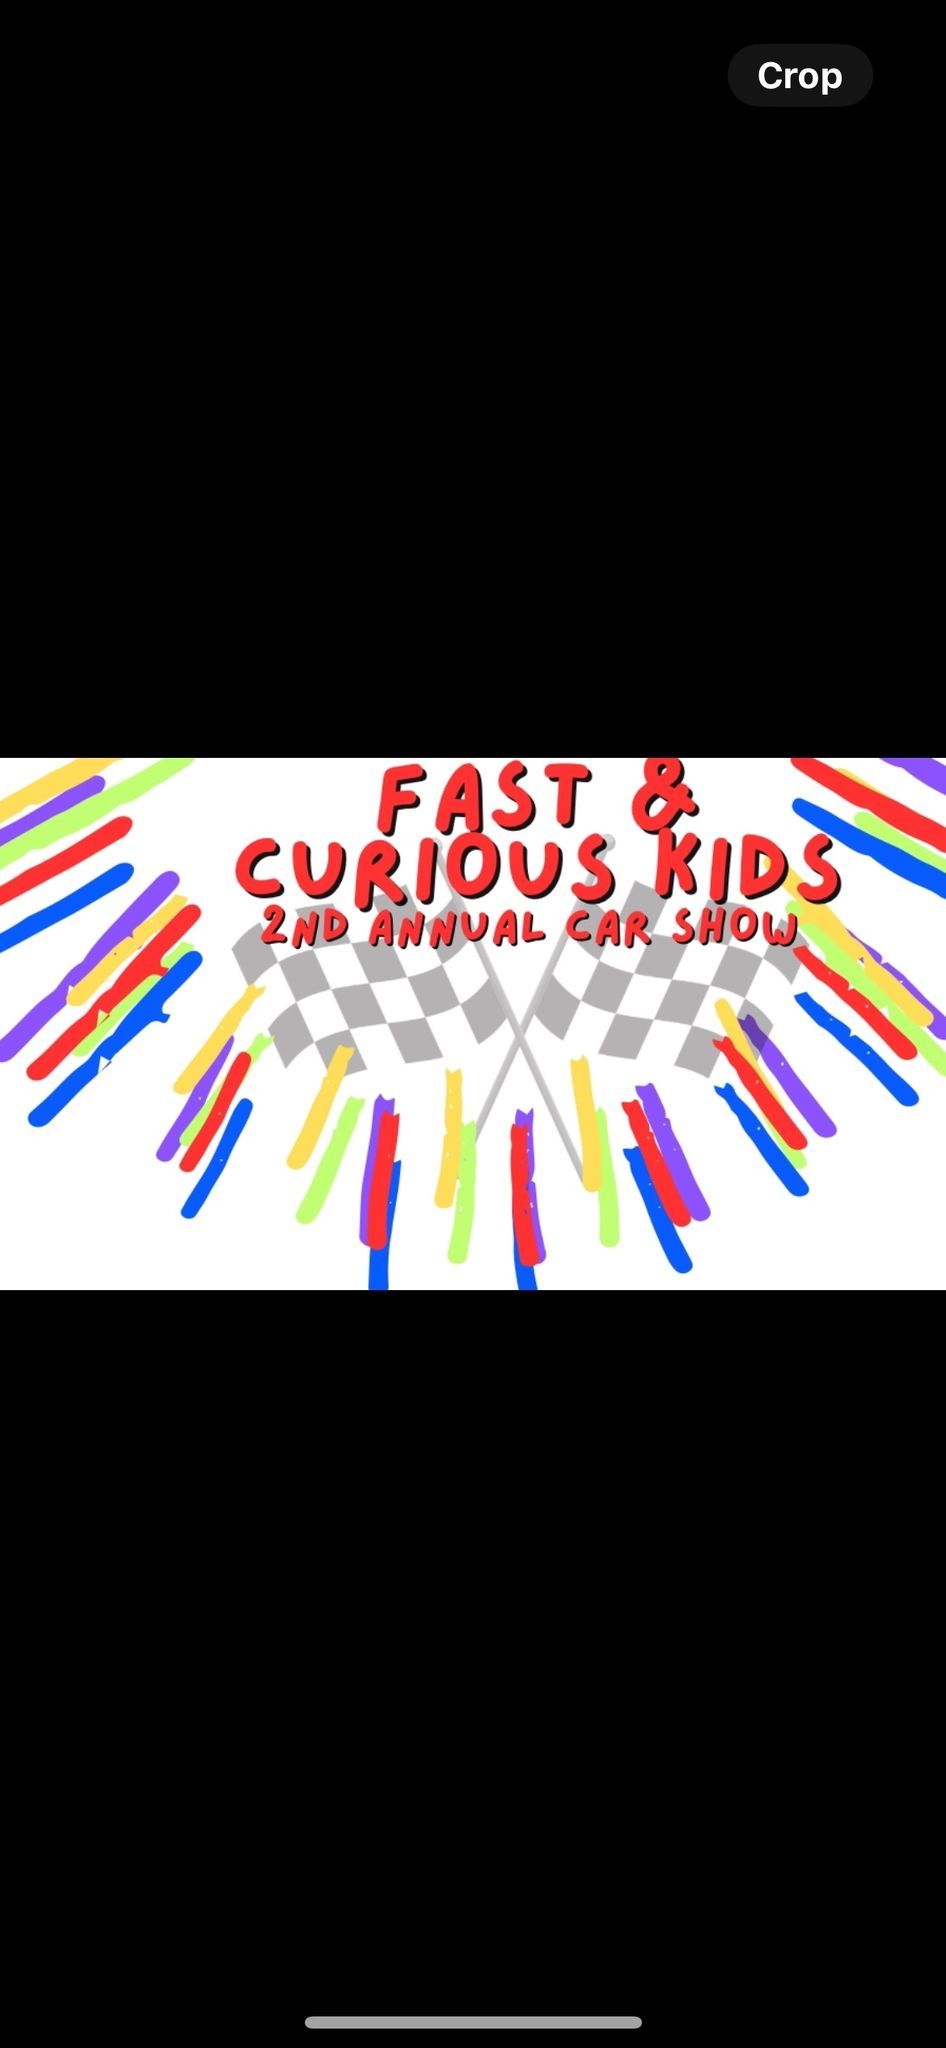 Fast & Curious Kids 2nd Annual Car Show